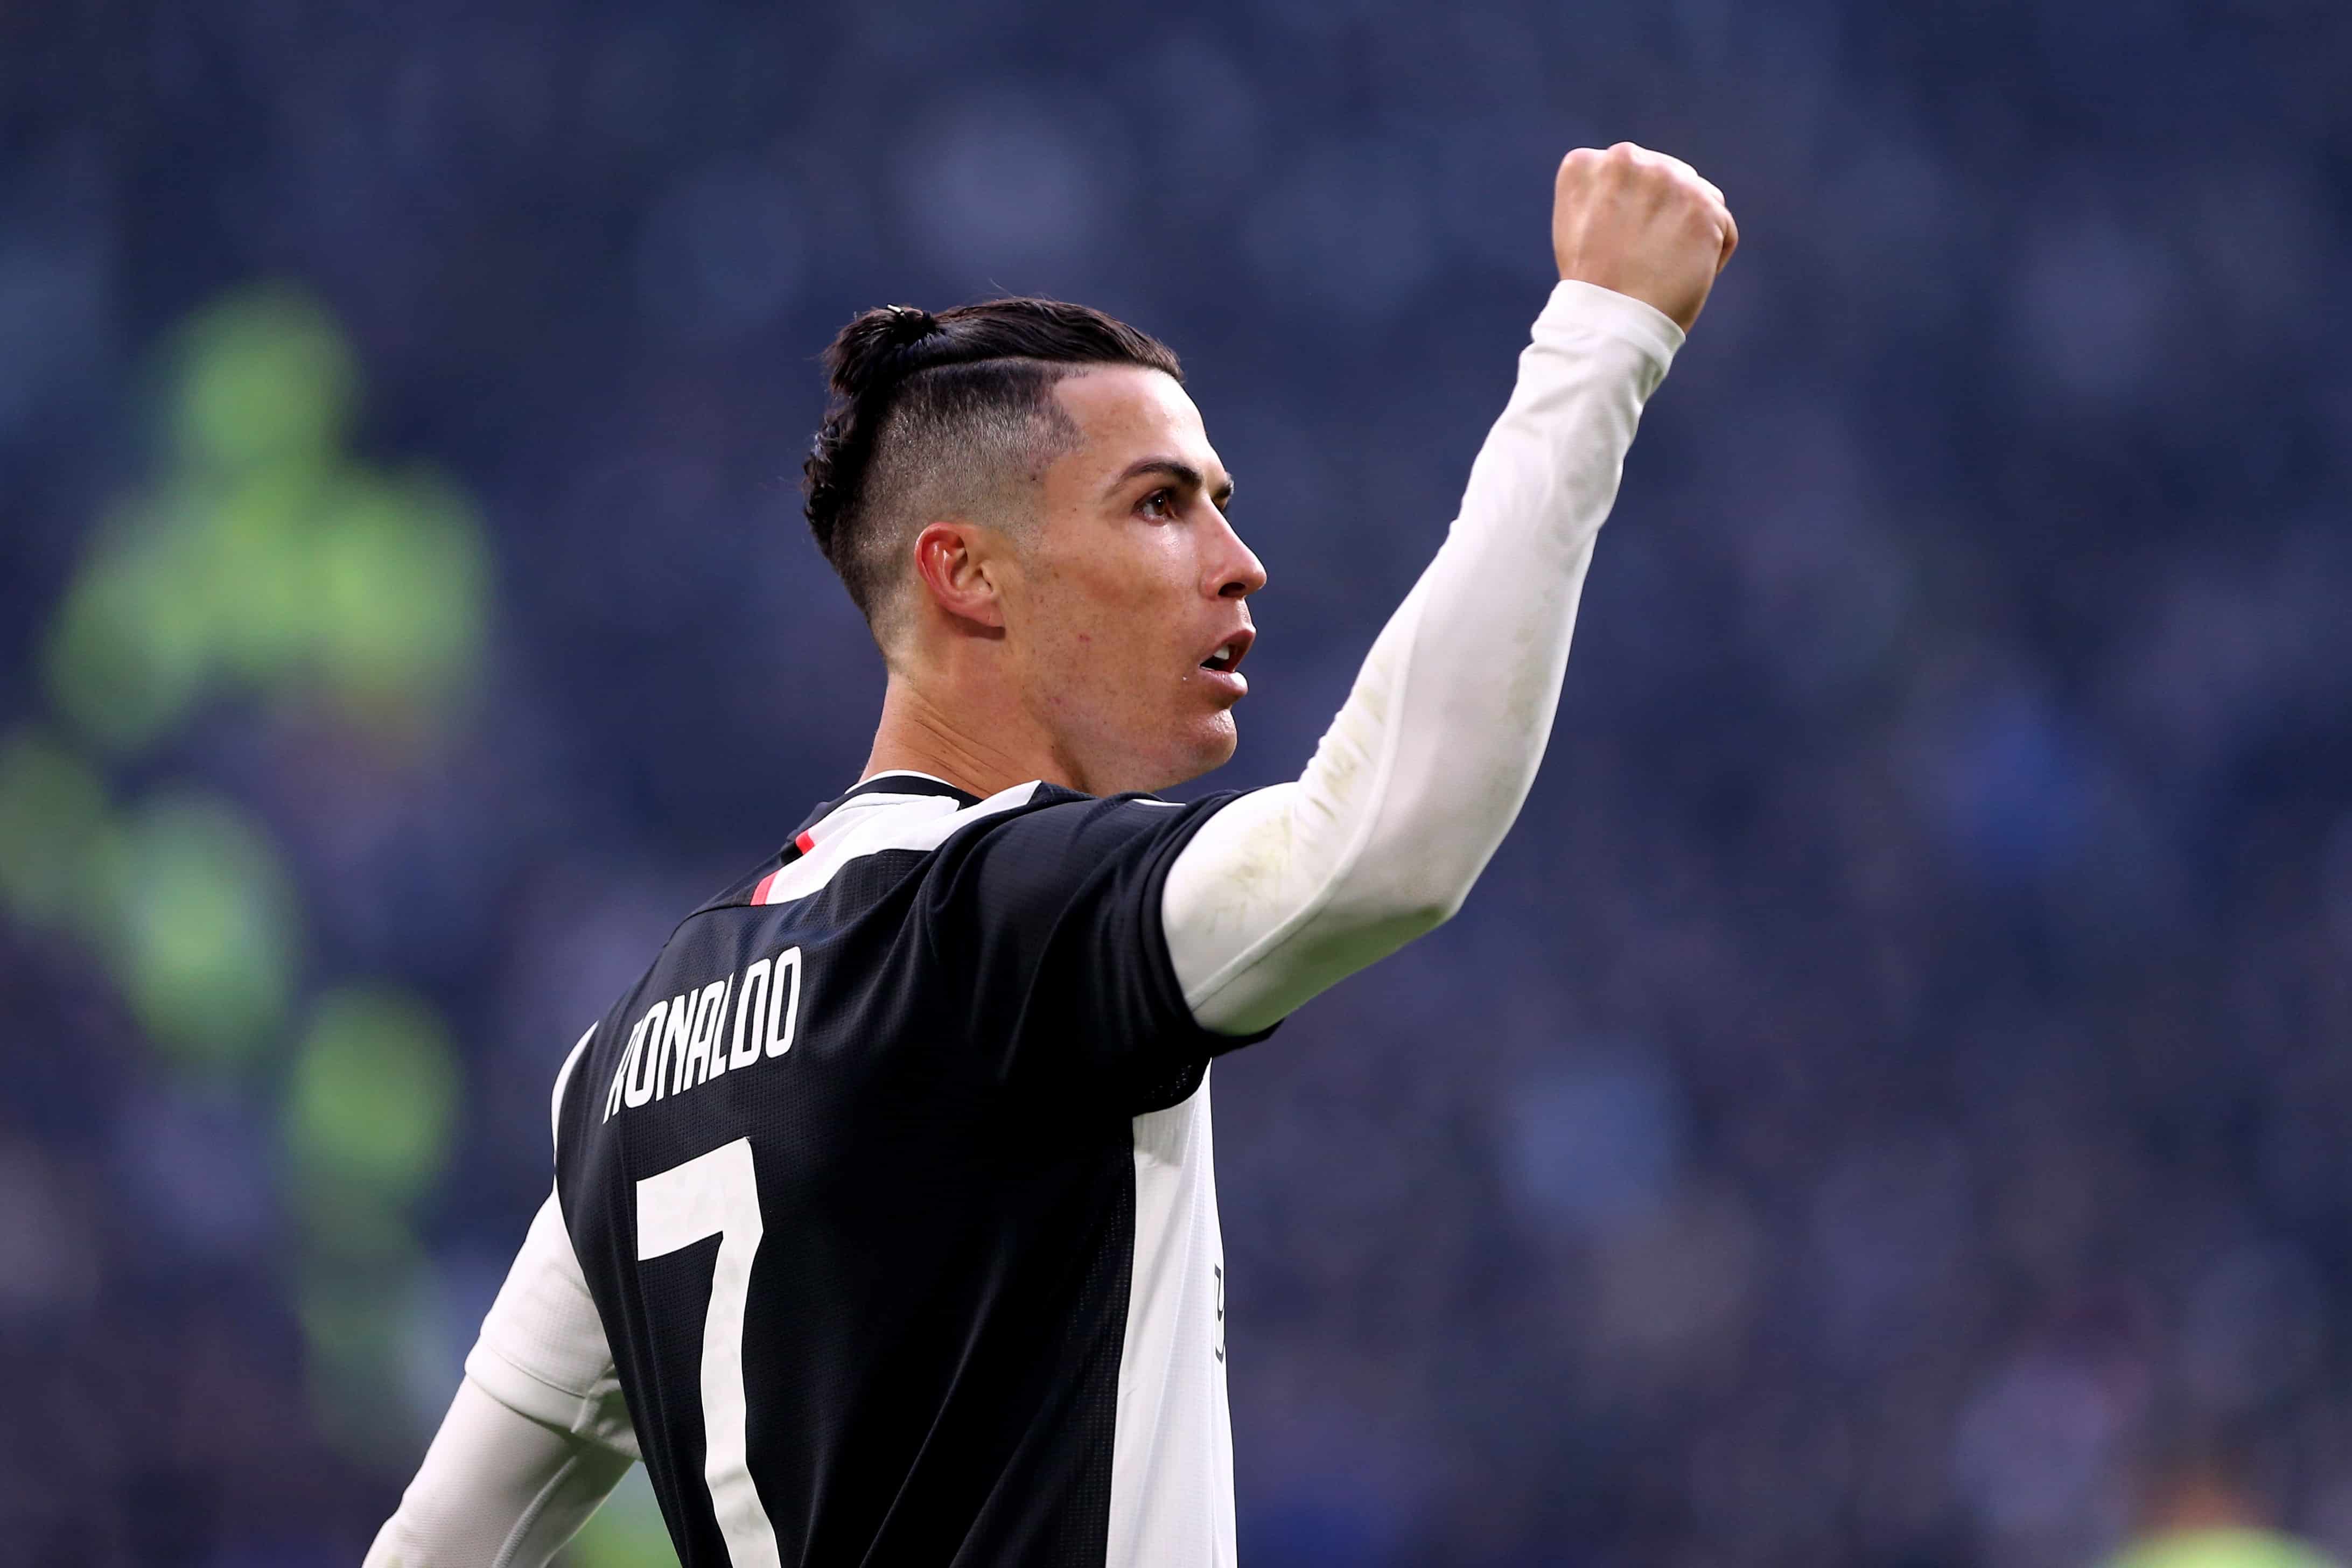 Captain of the Portugal National Team and Juventus' forward striker, Cristiano Ronaldo in a man bun during a match against Cagliari Calcio.